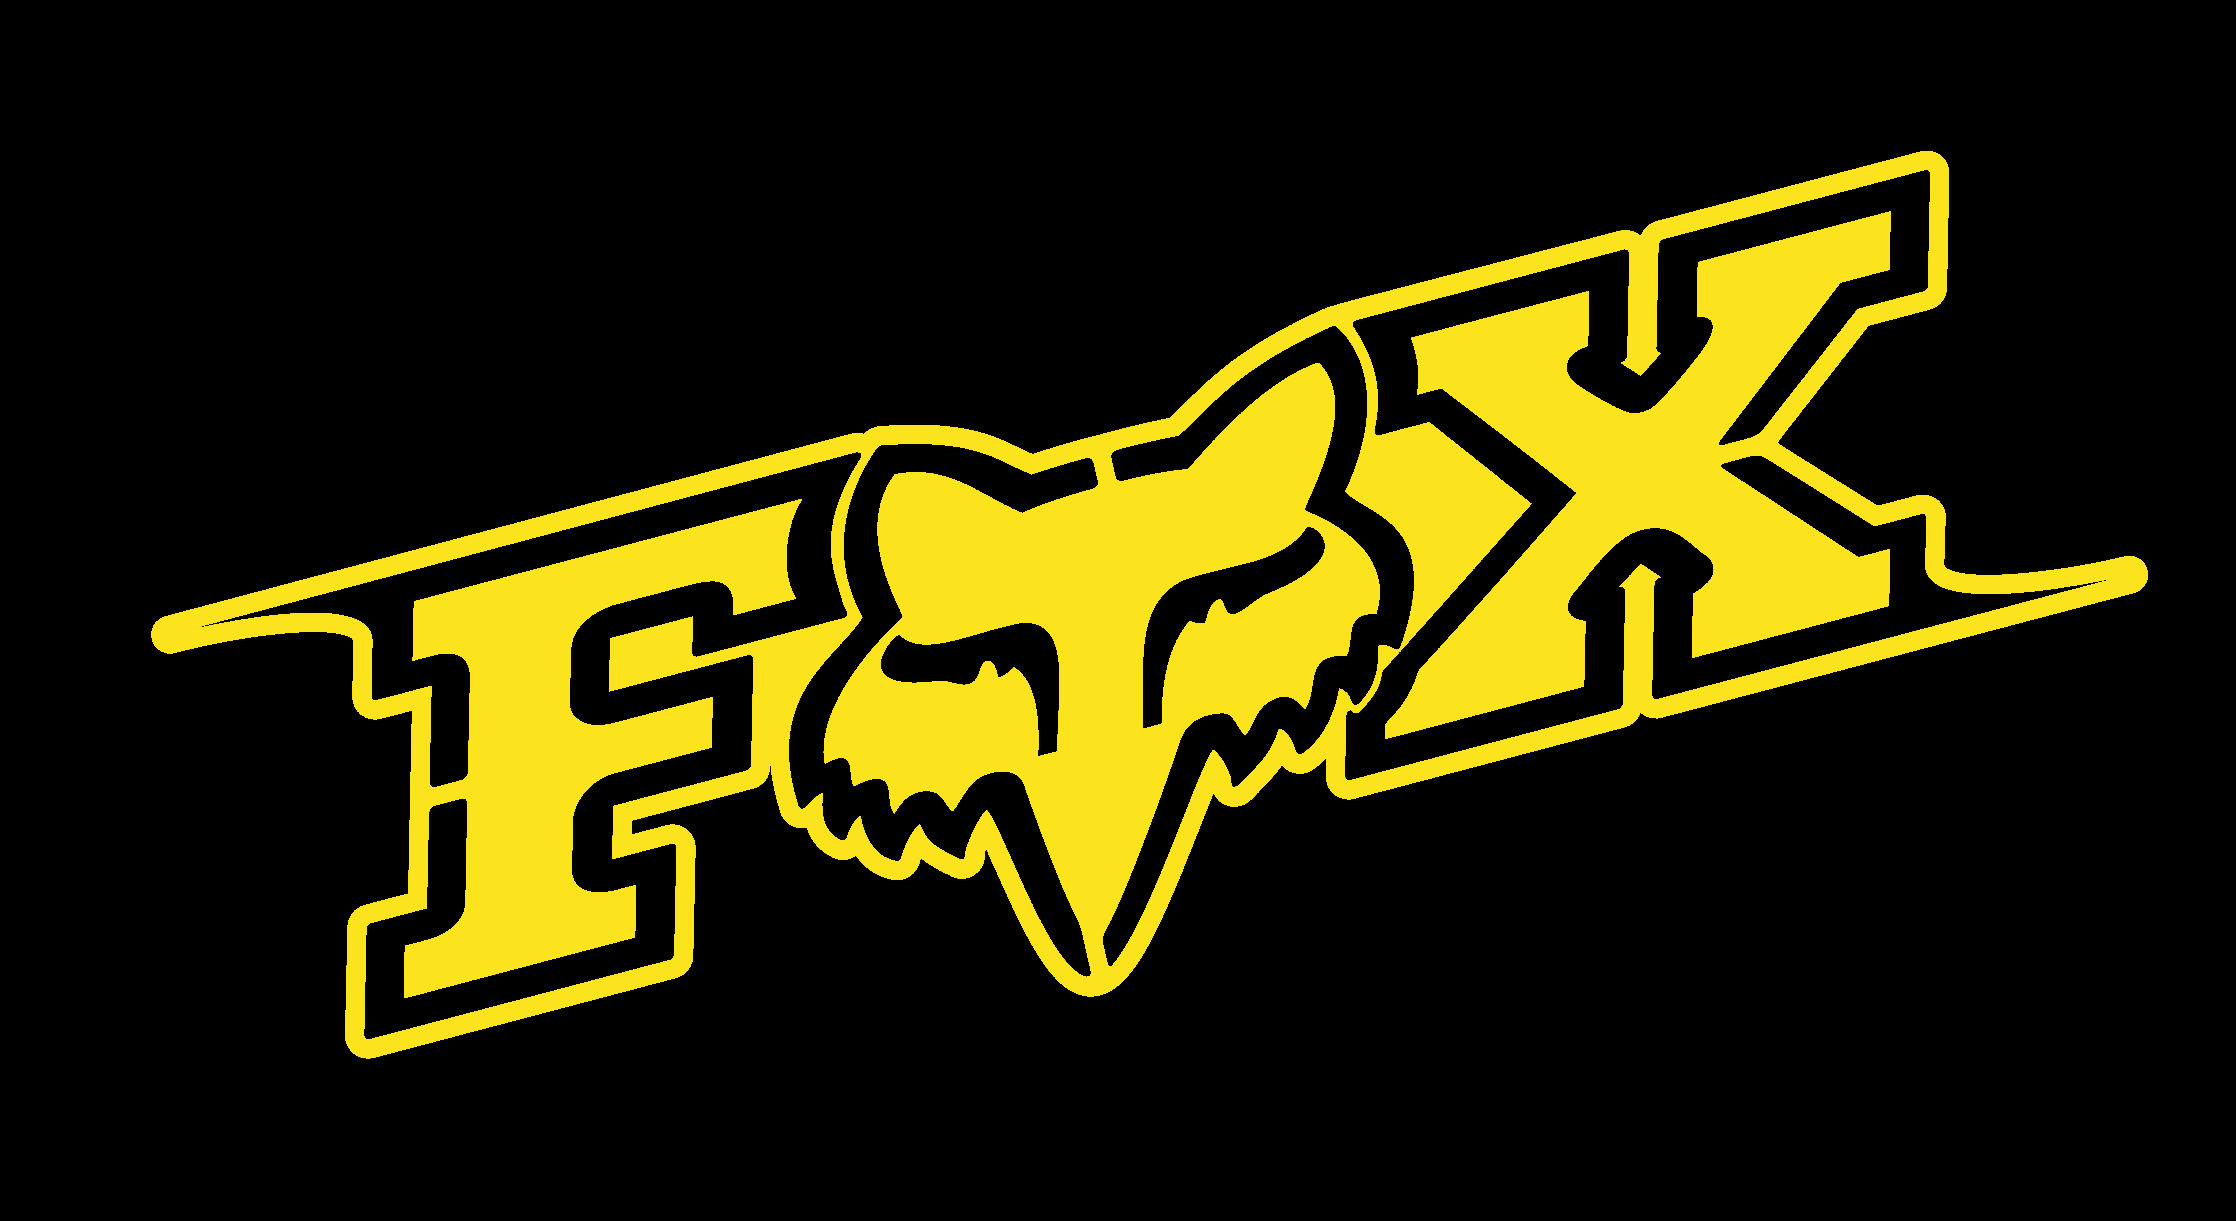 File Name 806838 Best Logos Wallpaper Fox Racing 806838 Logos